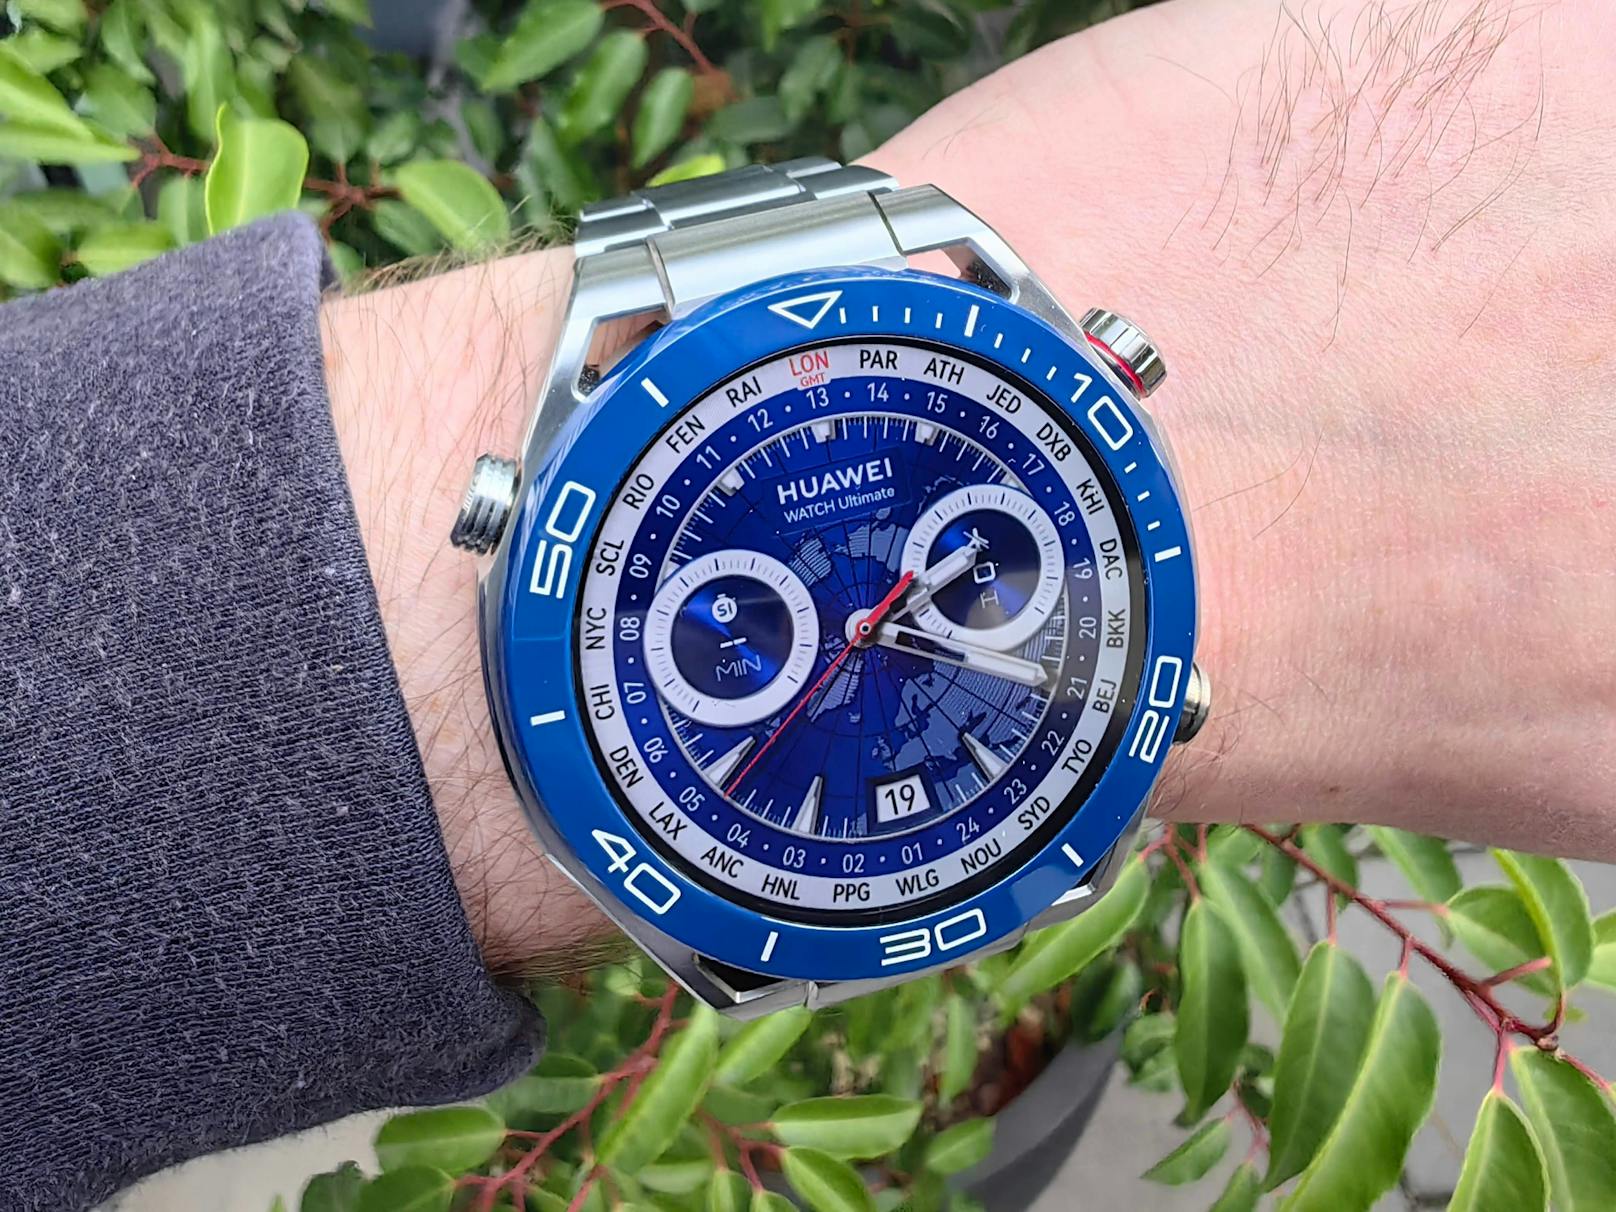 Die Huawei Watch Ultimate bekommt zum Start speziell angepasste Watch Faces spendiert.